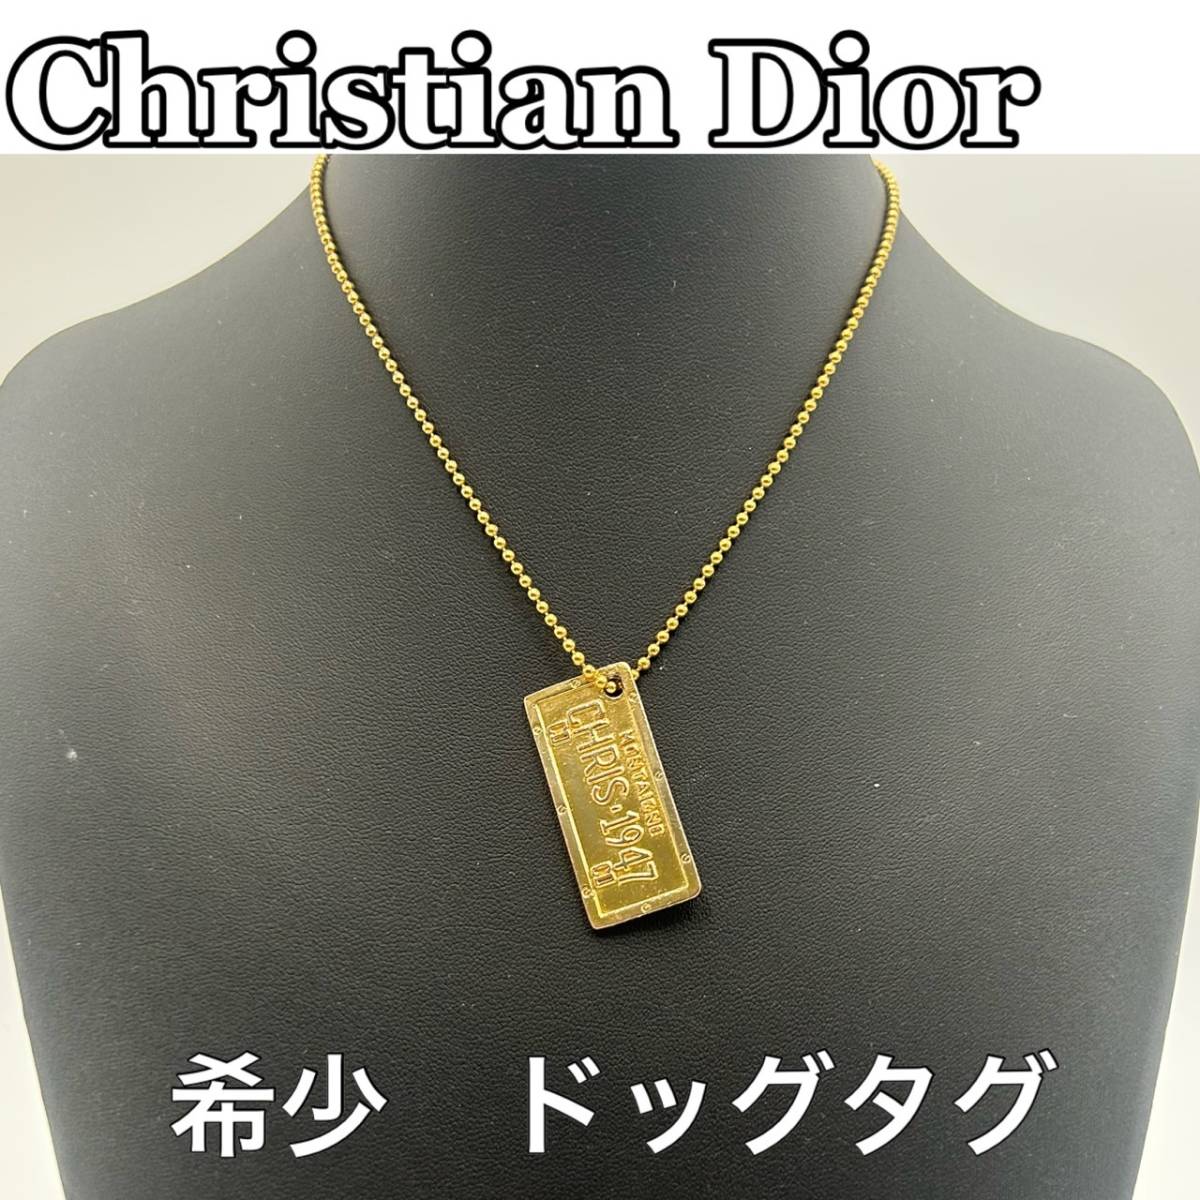 B491 Christian Dior クリスチャンディオール 希少 プレートネックレス ゴールド ヴィンテージ CHRIS1947 ドッグタグ